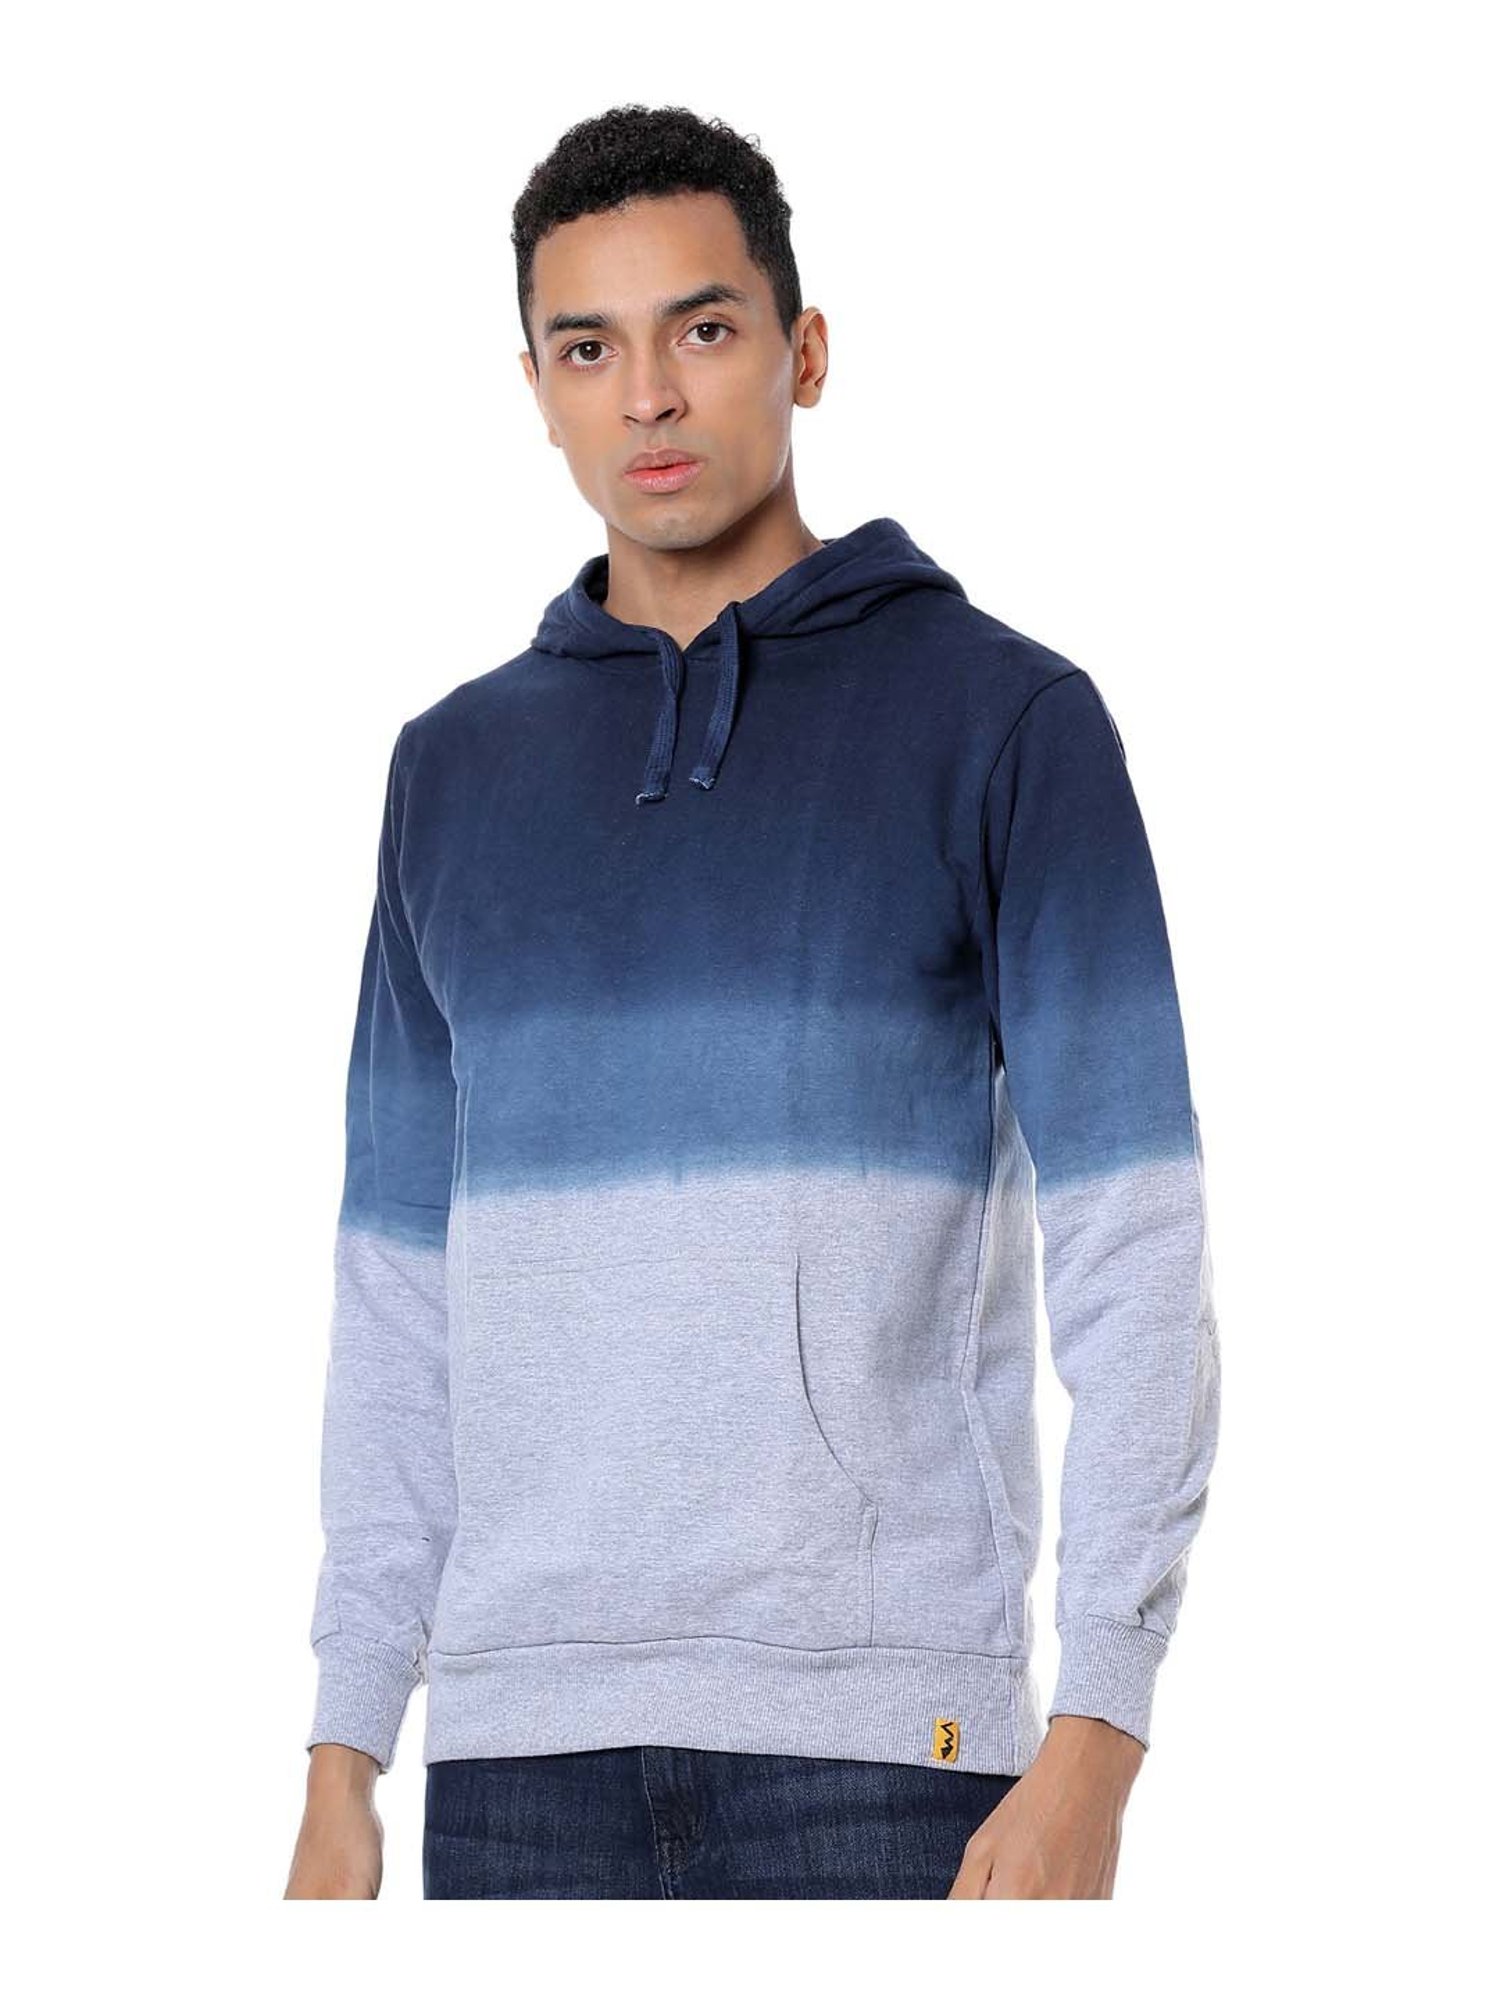 Buy Campus Sutra Men's Multicolour Colour-Blocked Sweatshirt With